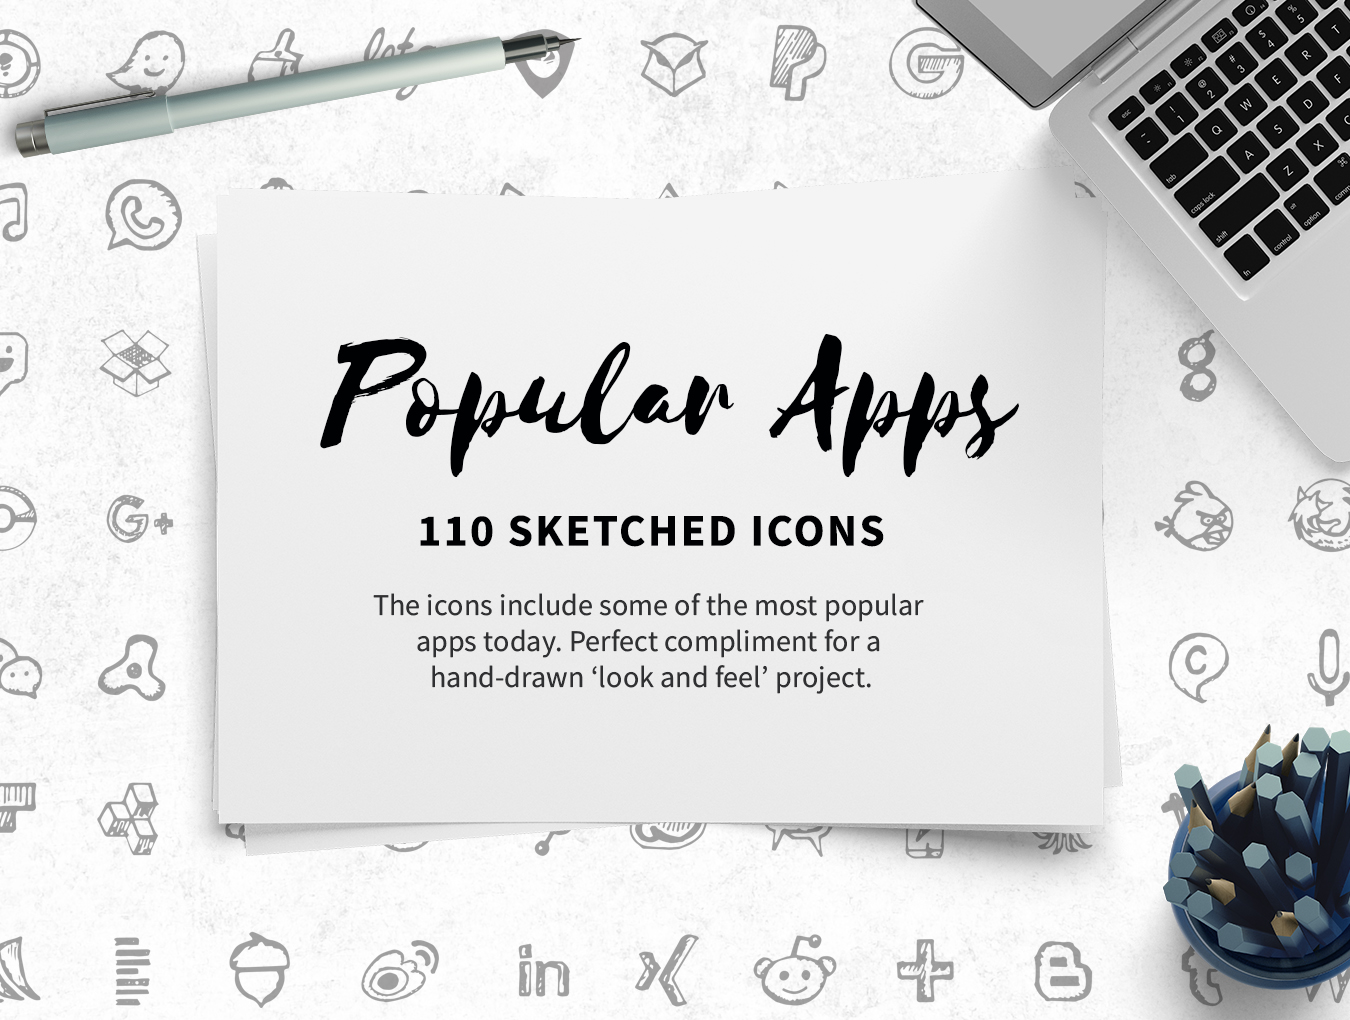 流行的手绘风格图标素材套装Popular Apps Icon